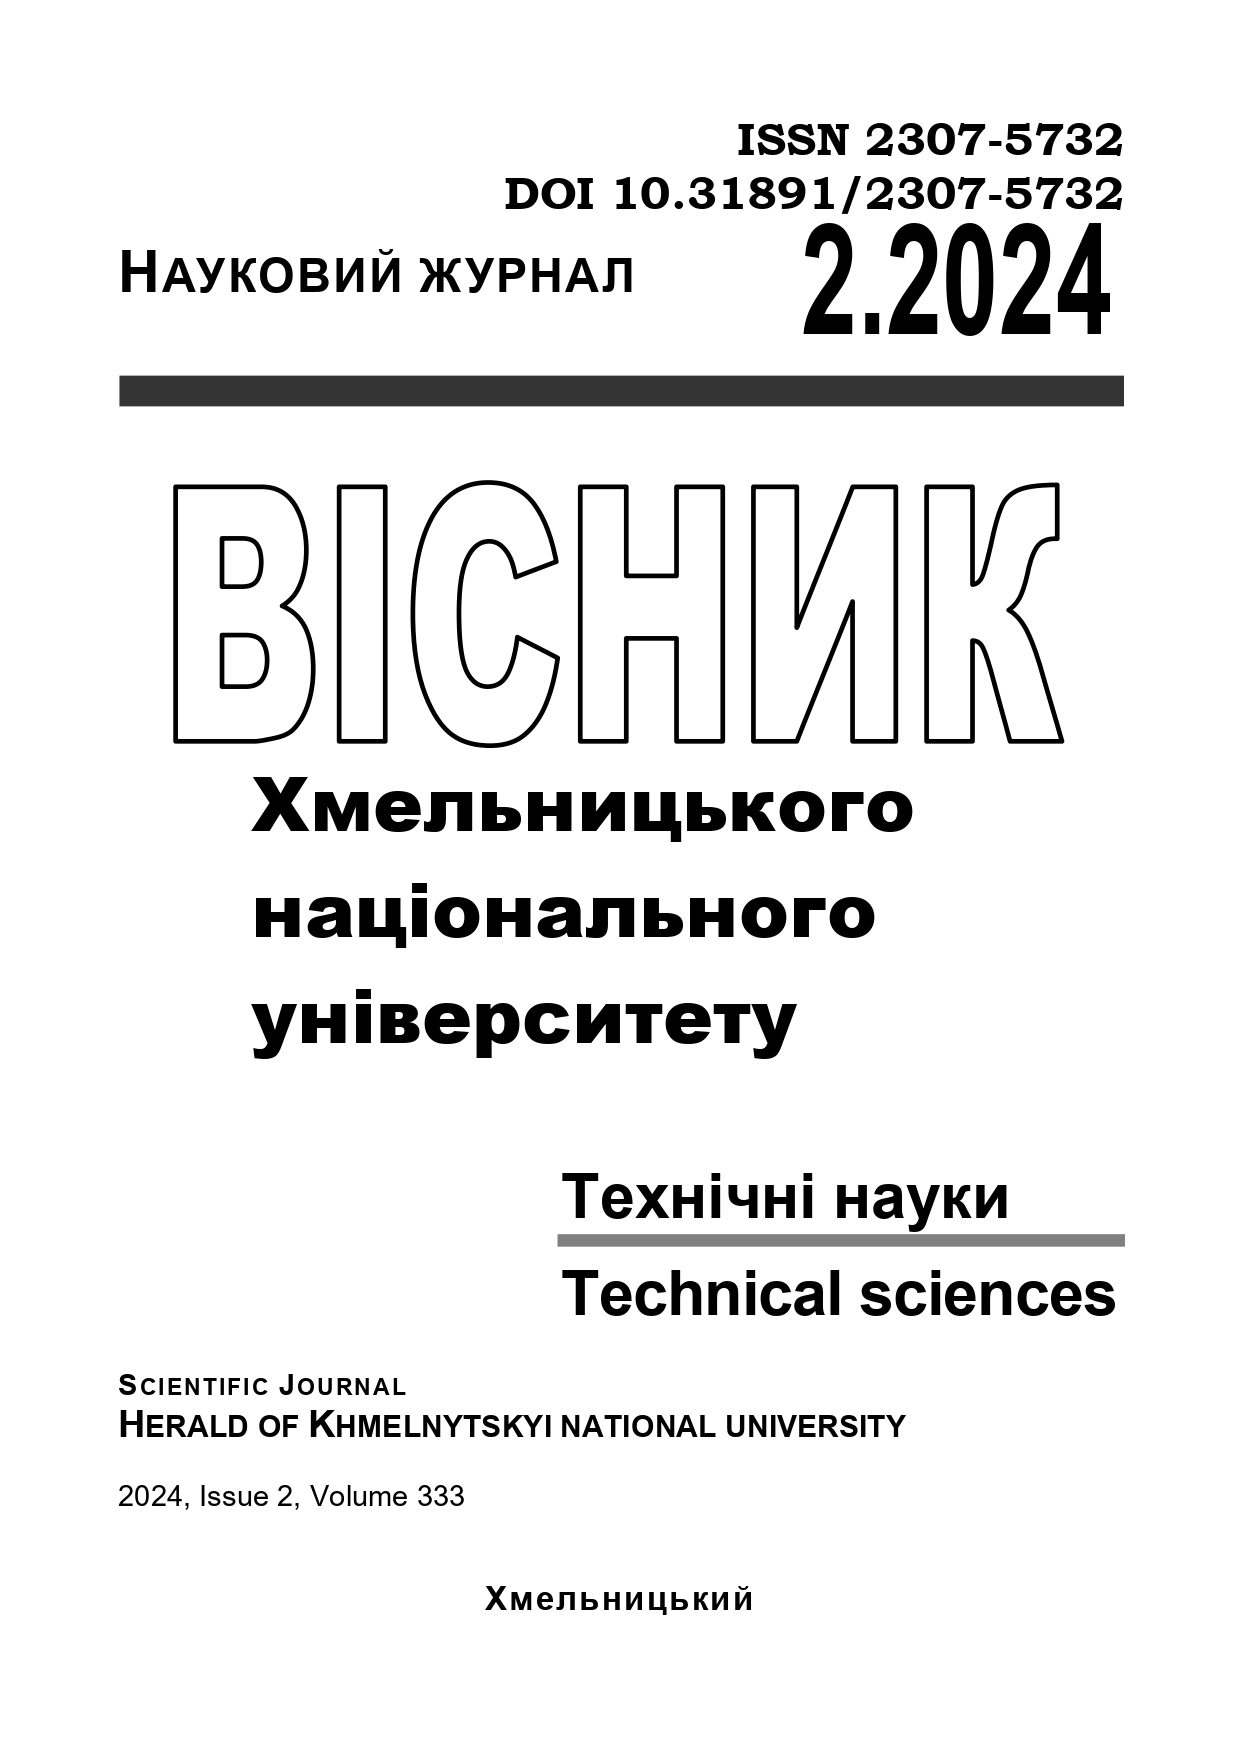 					View Vol. 333 No. 2 (2024): Herald of Khmelnytskyi National University. Technical sciences
				